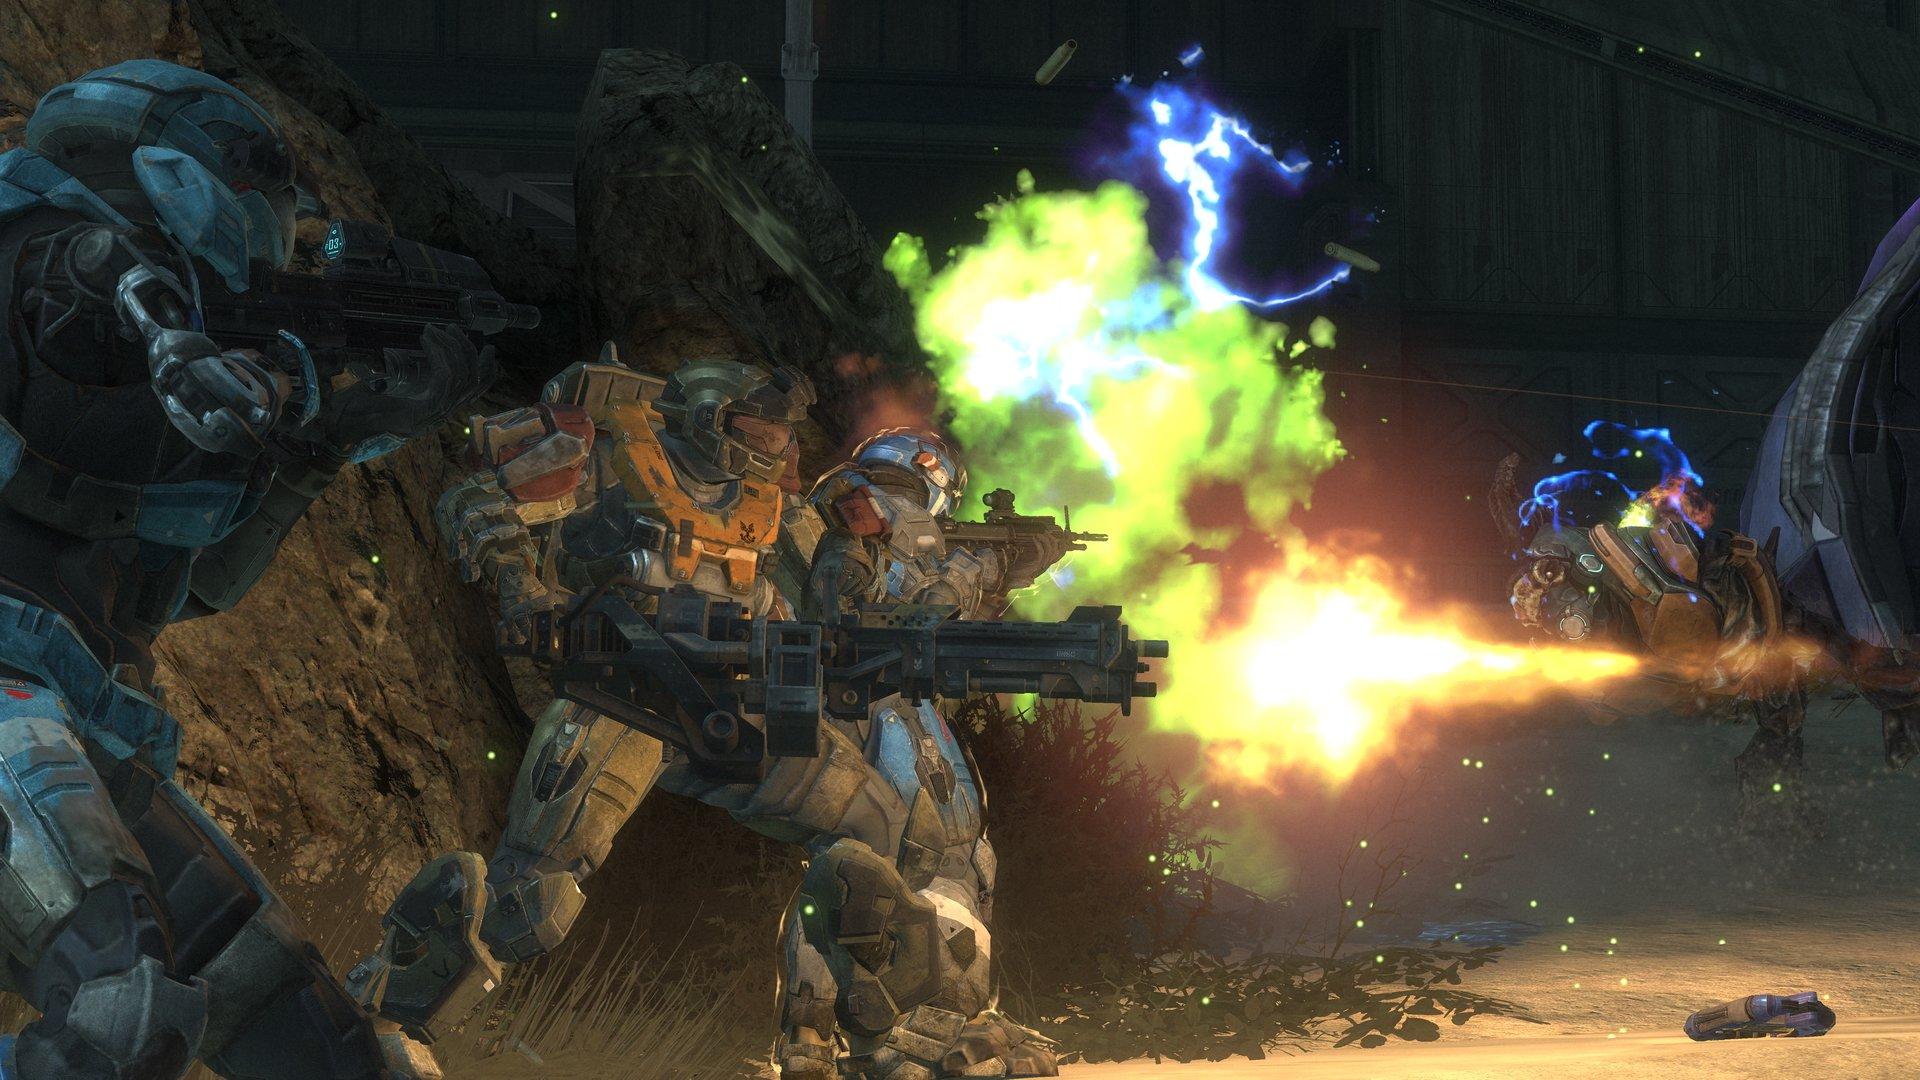 Halo: Reach - Xbox 360 Game